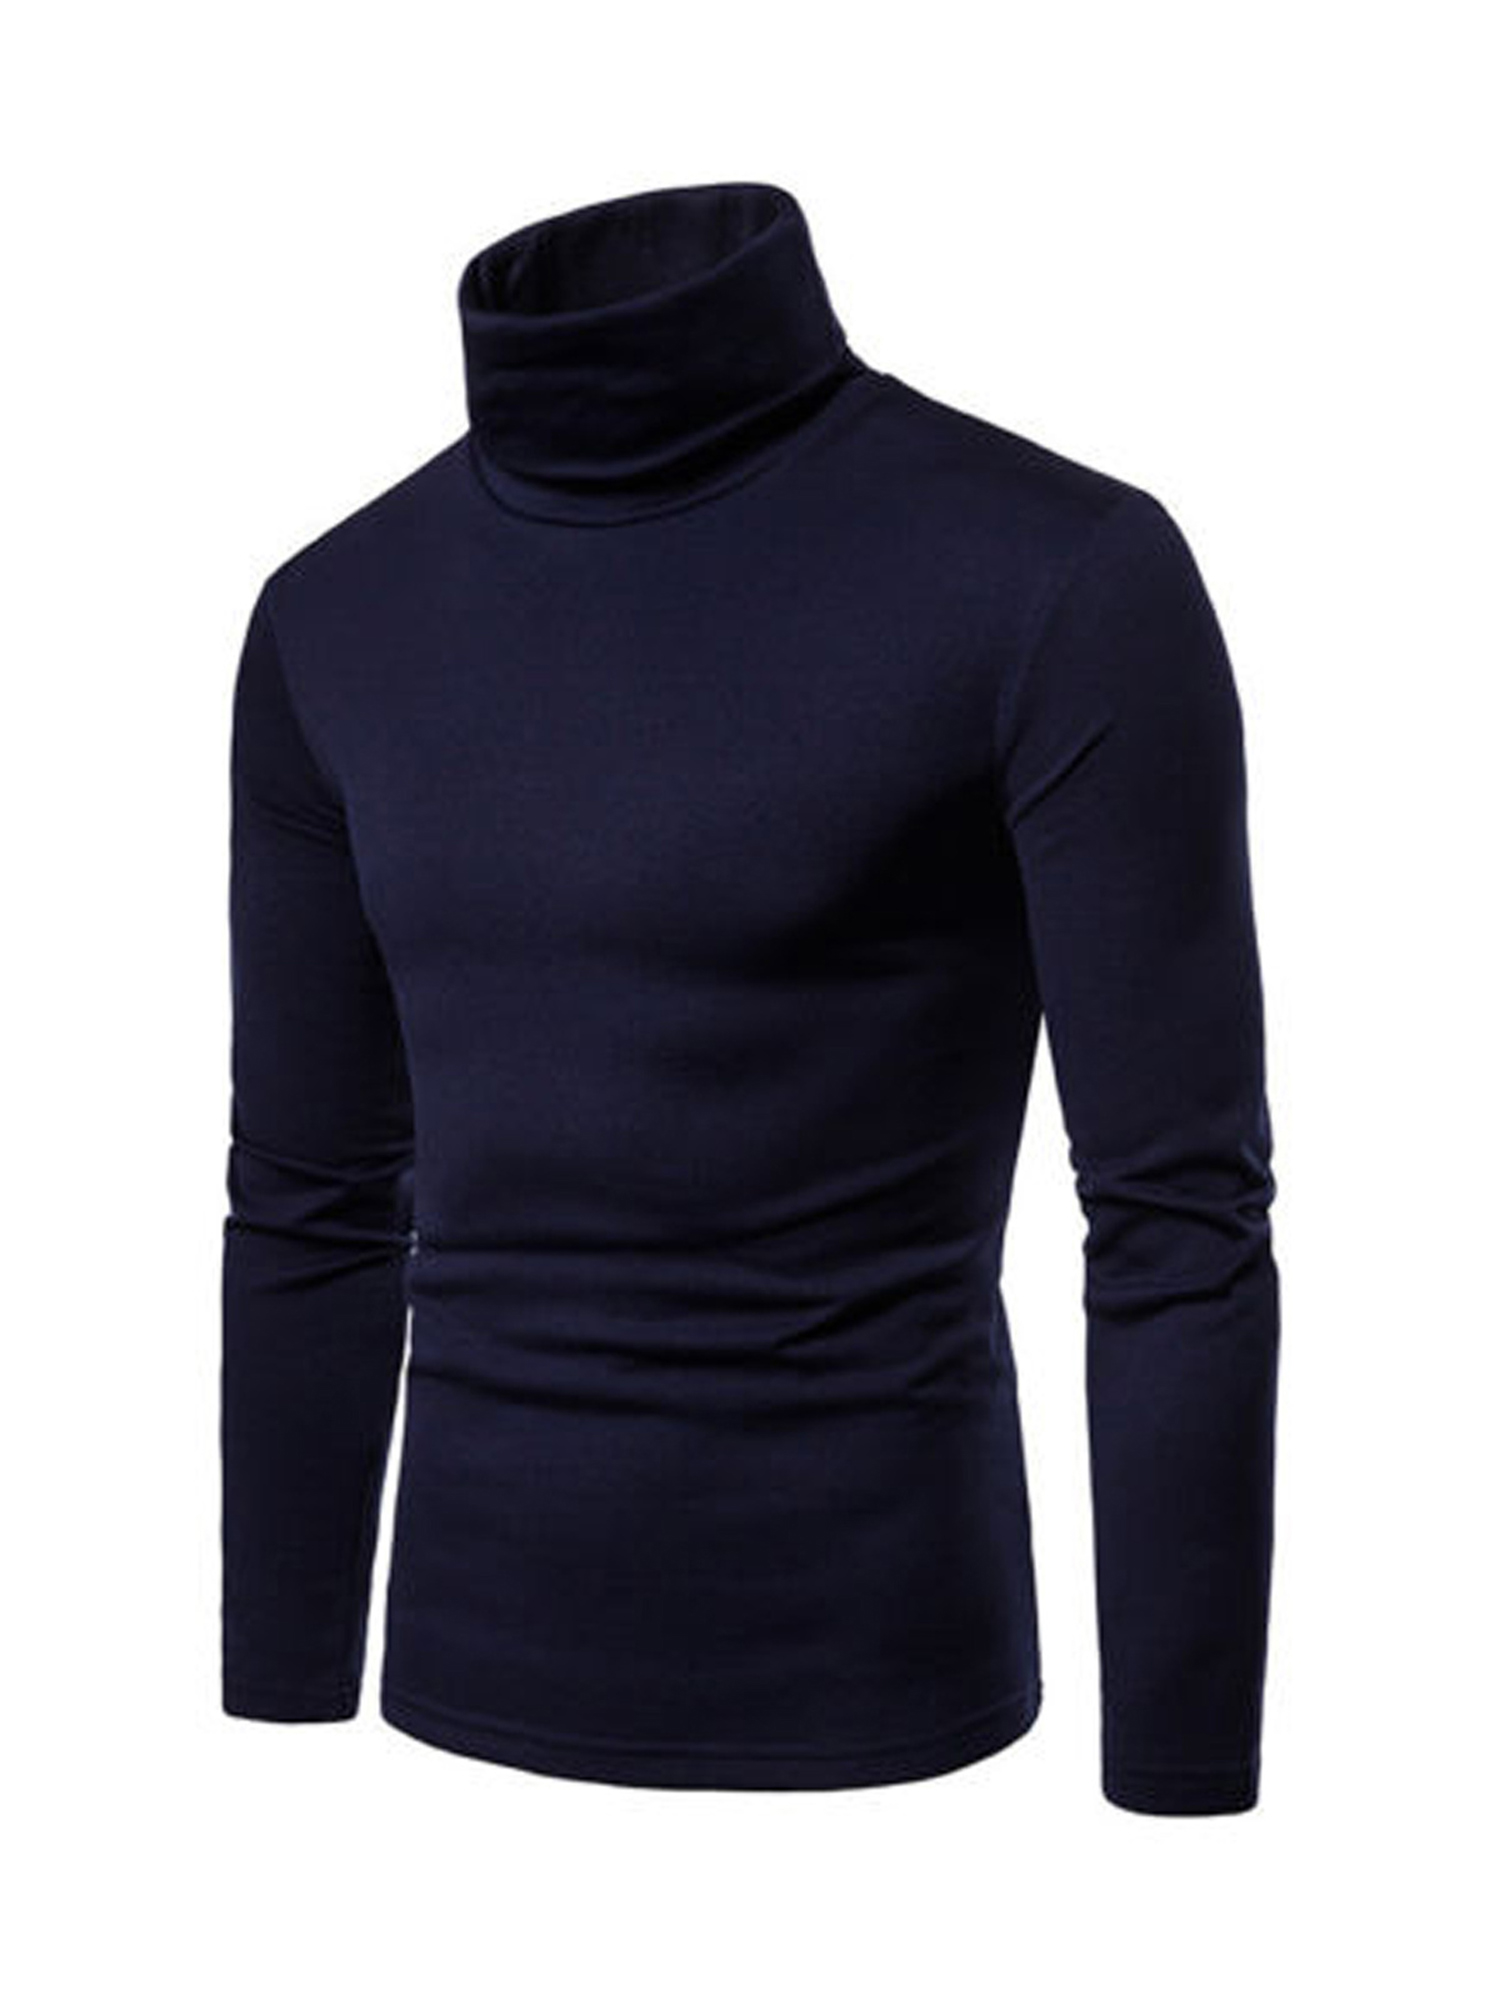 Sunisery Mens Turtleneck Pullover Knitted Jumper Tops Stretch Slim Basic Sweater Shirt - image 3 of 6